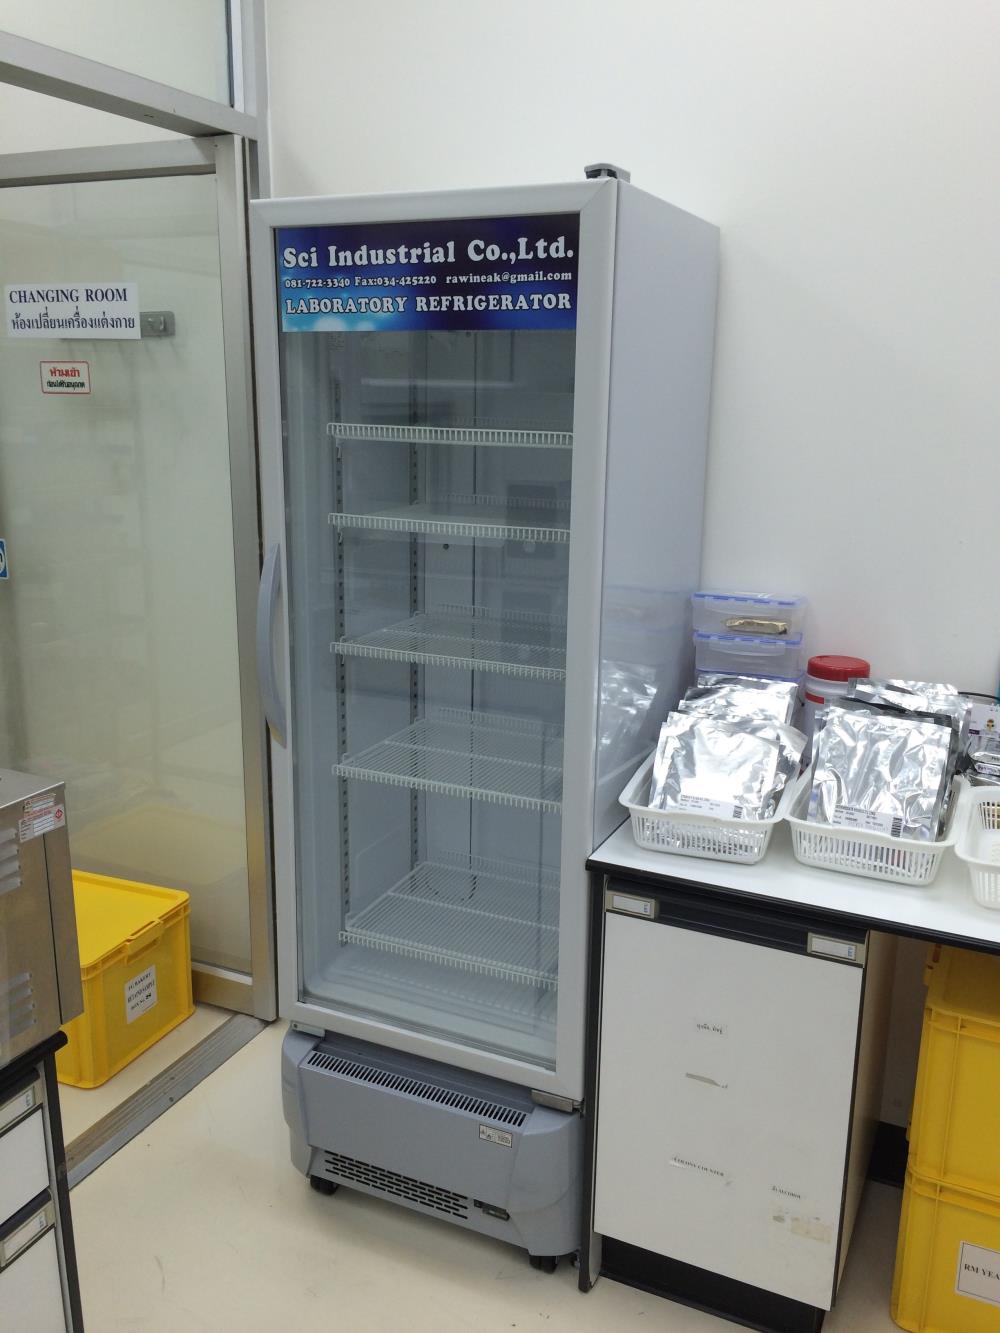 LAB Refrigerator,ตู้เย็น 4 องศาเซลเซียส,Sci Industrail,Instruments and Controls/Laboratory Equipment